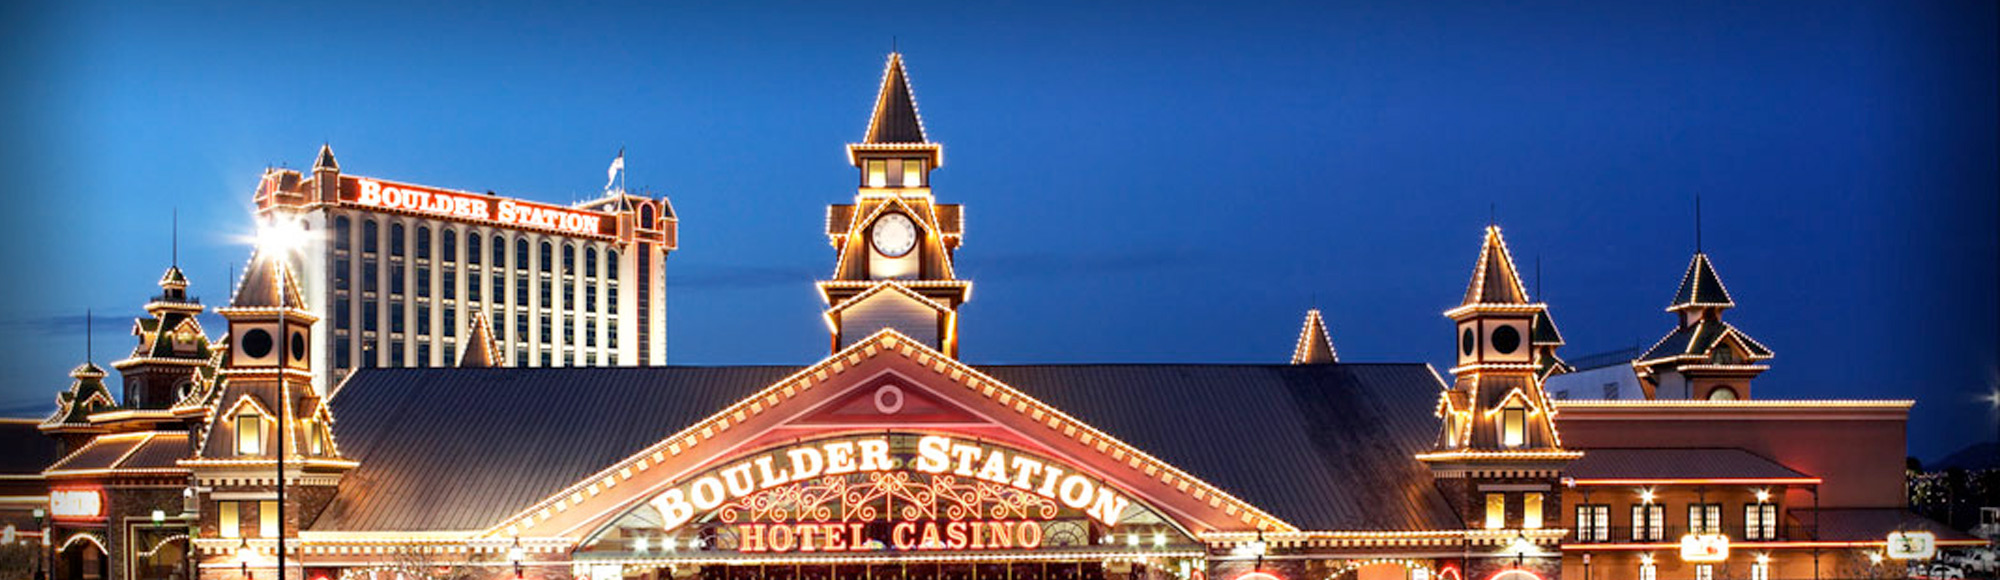 boulder station hotel casino pool youtube